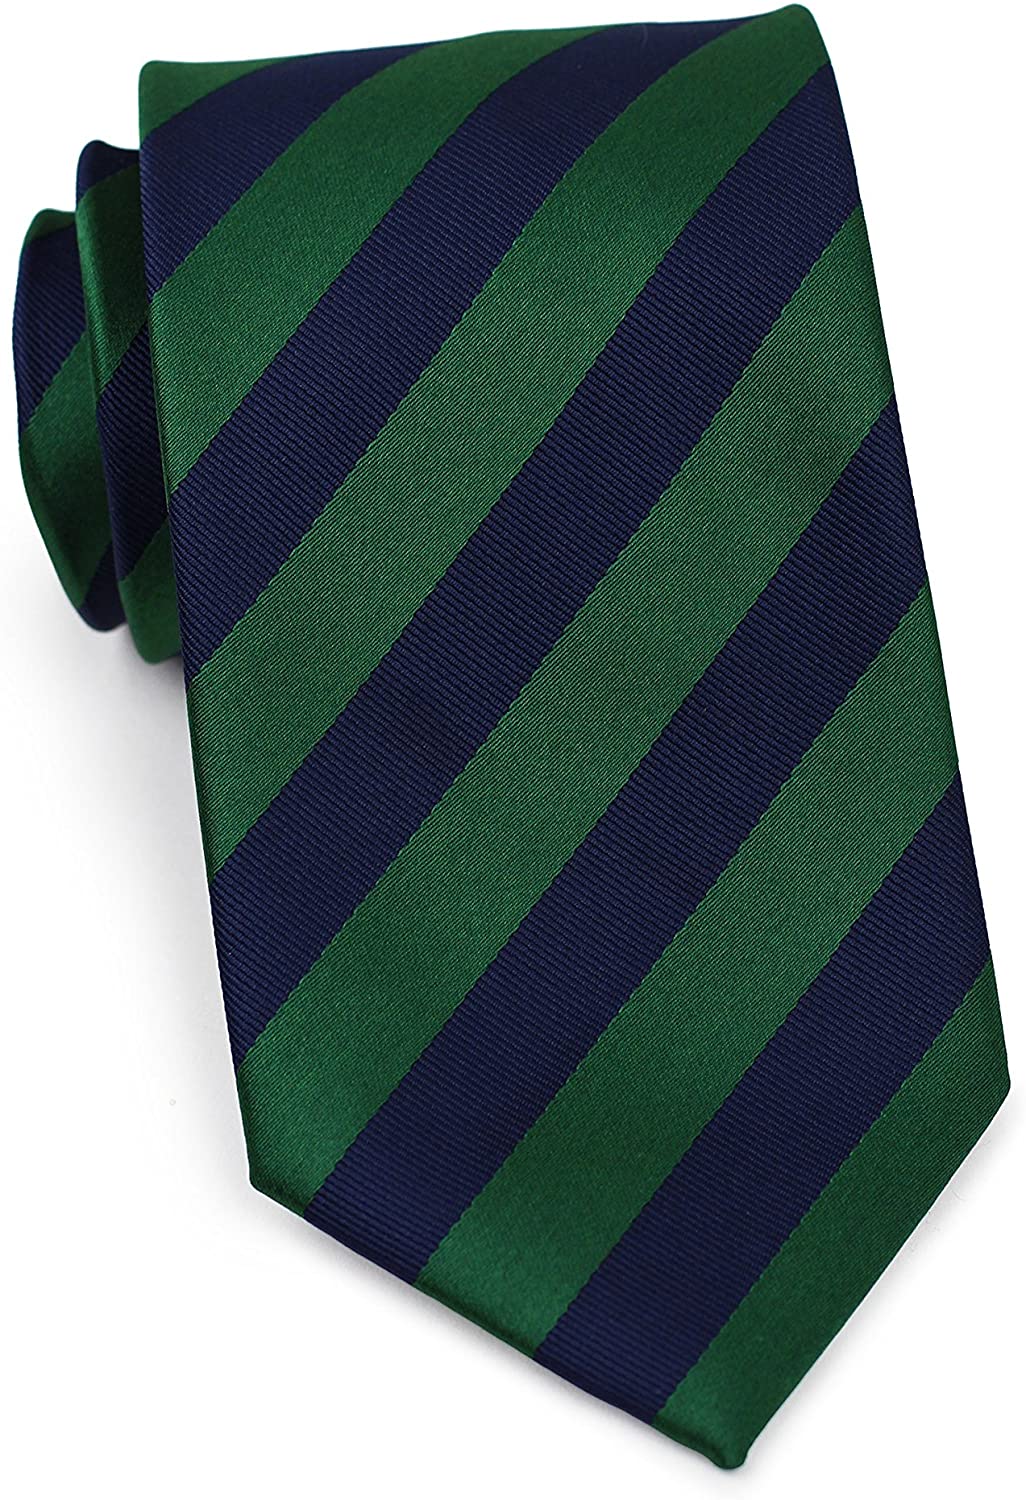 Details about   Bows-N-Ties Men's Necktie Floral Print Silk Satin Tie 3.1 Inches 